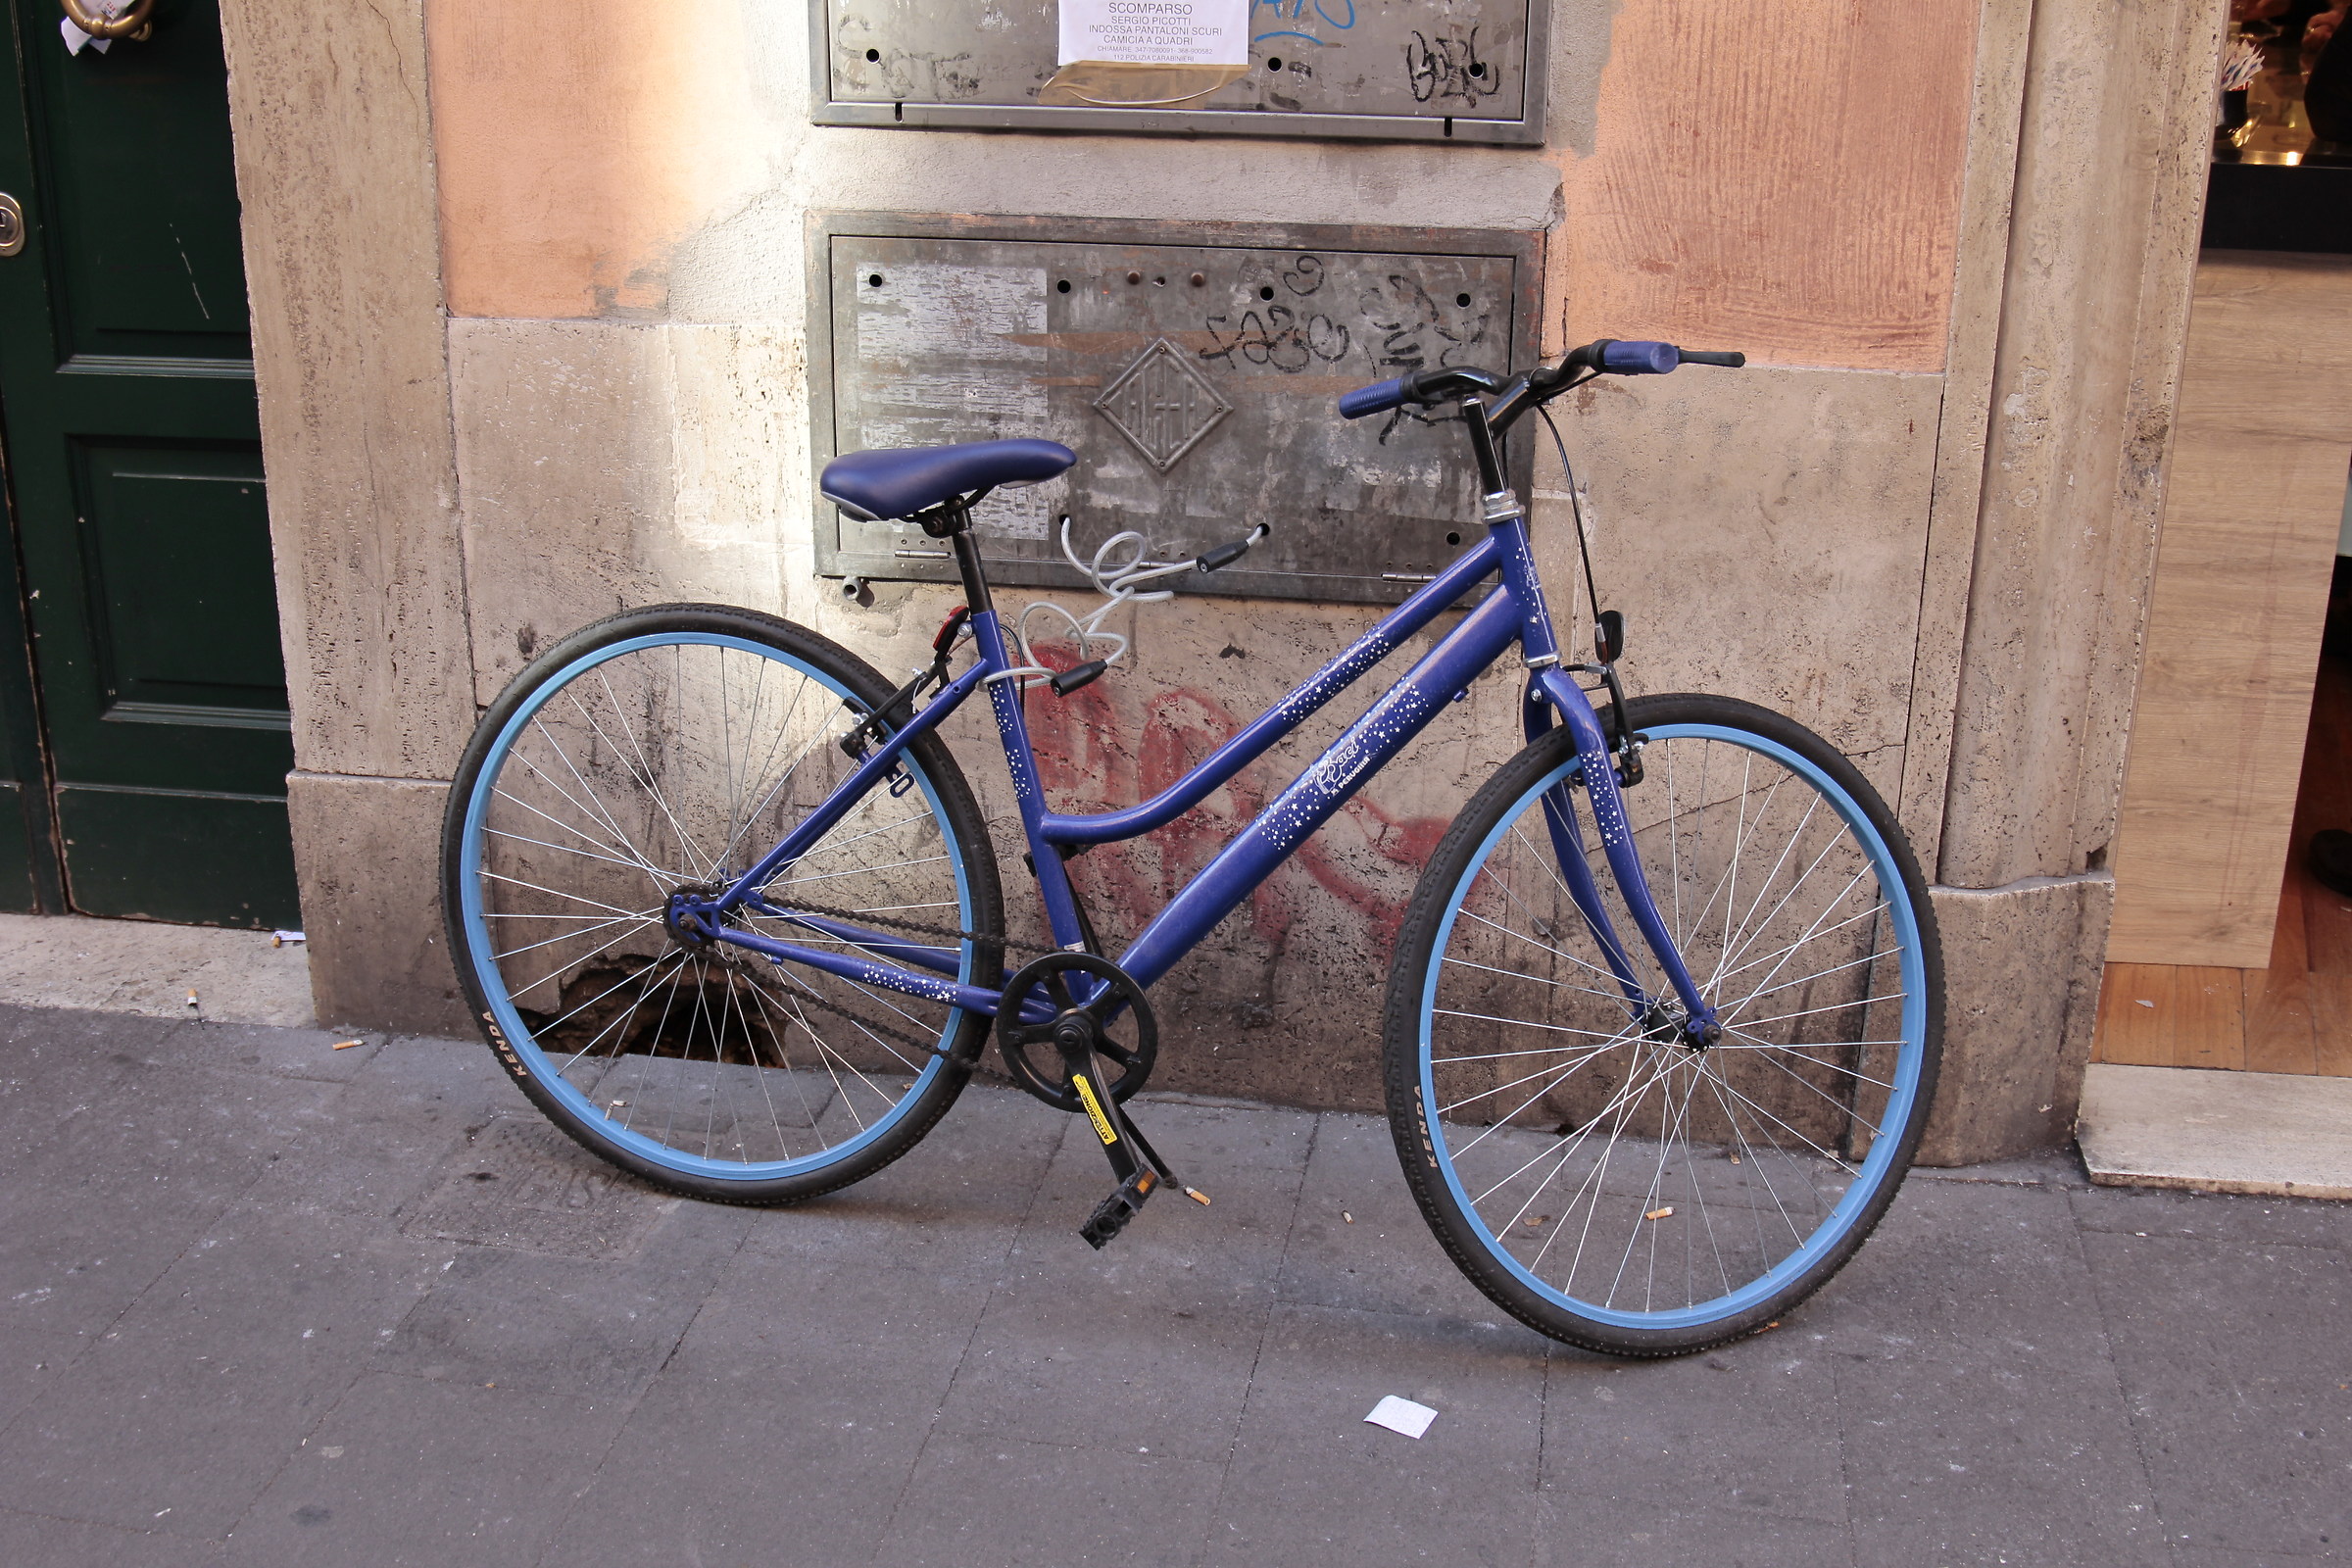 Bicycle with "Baci"...